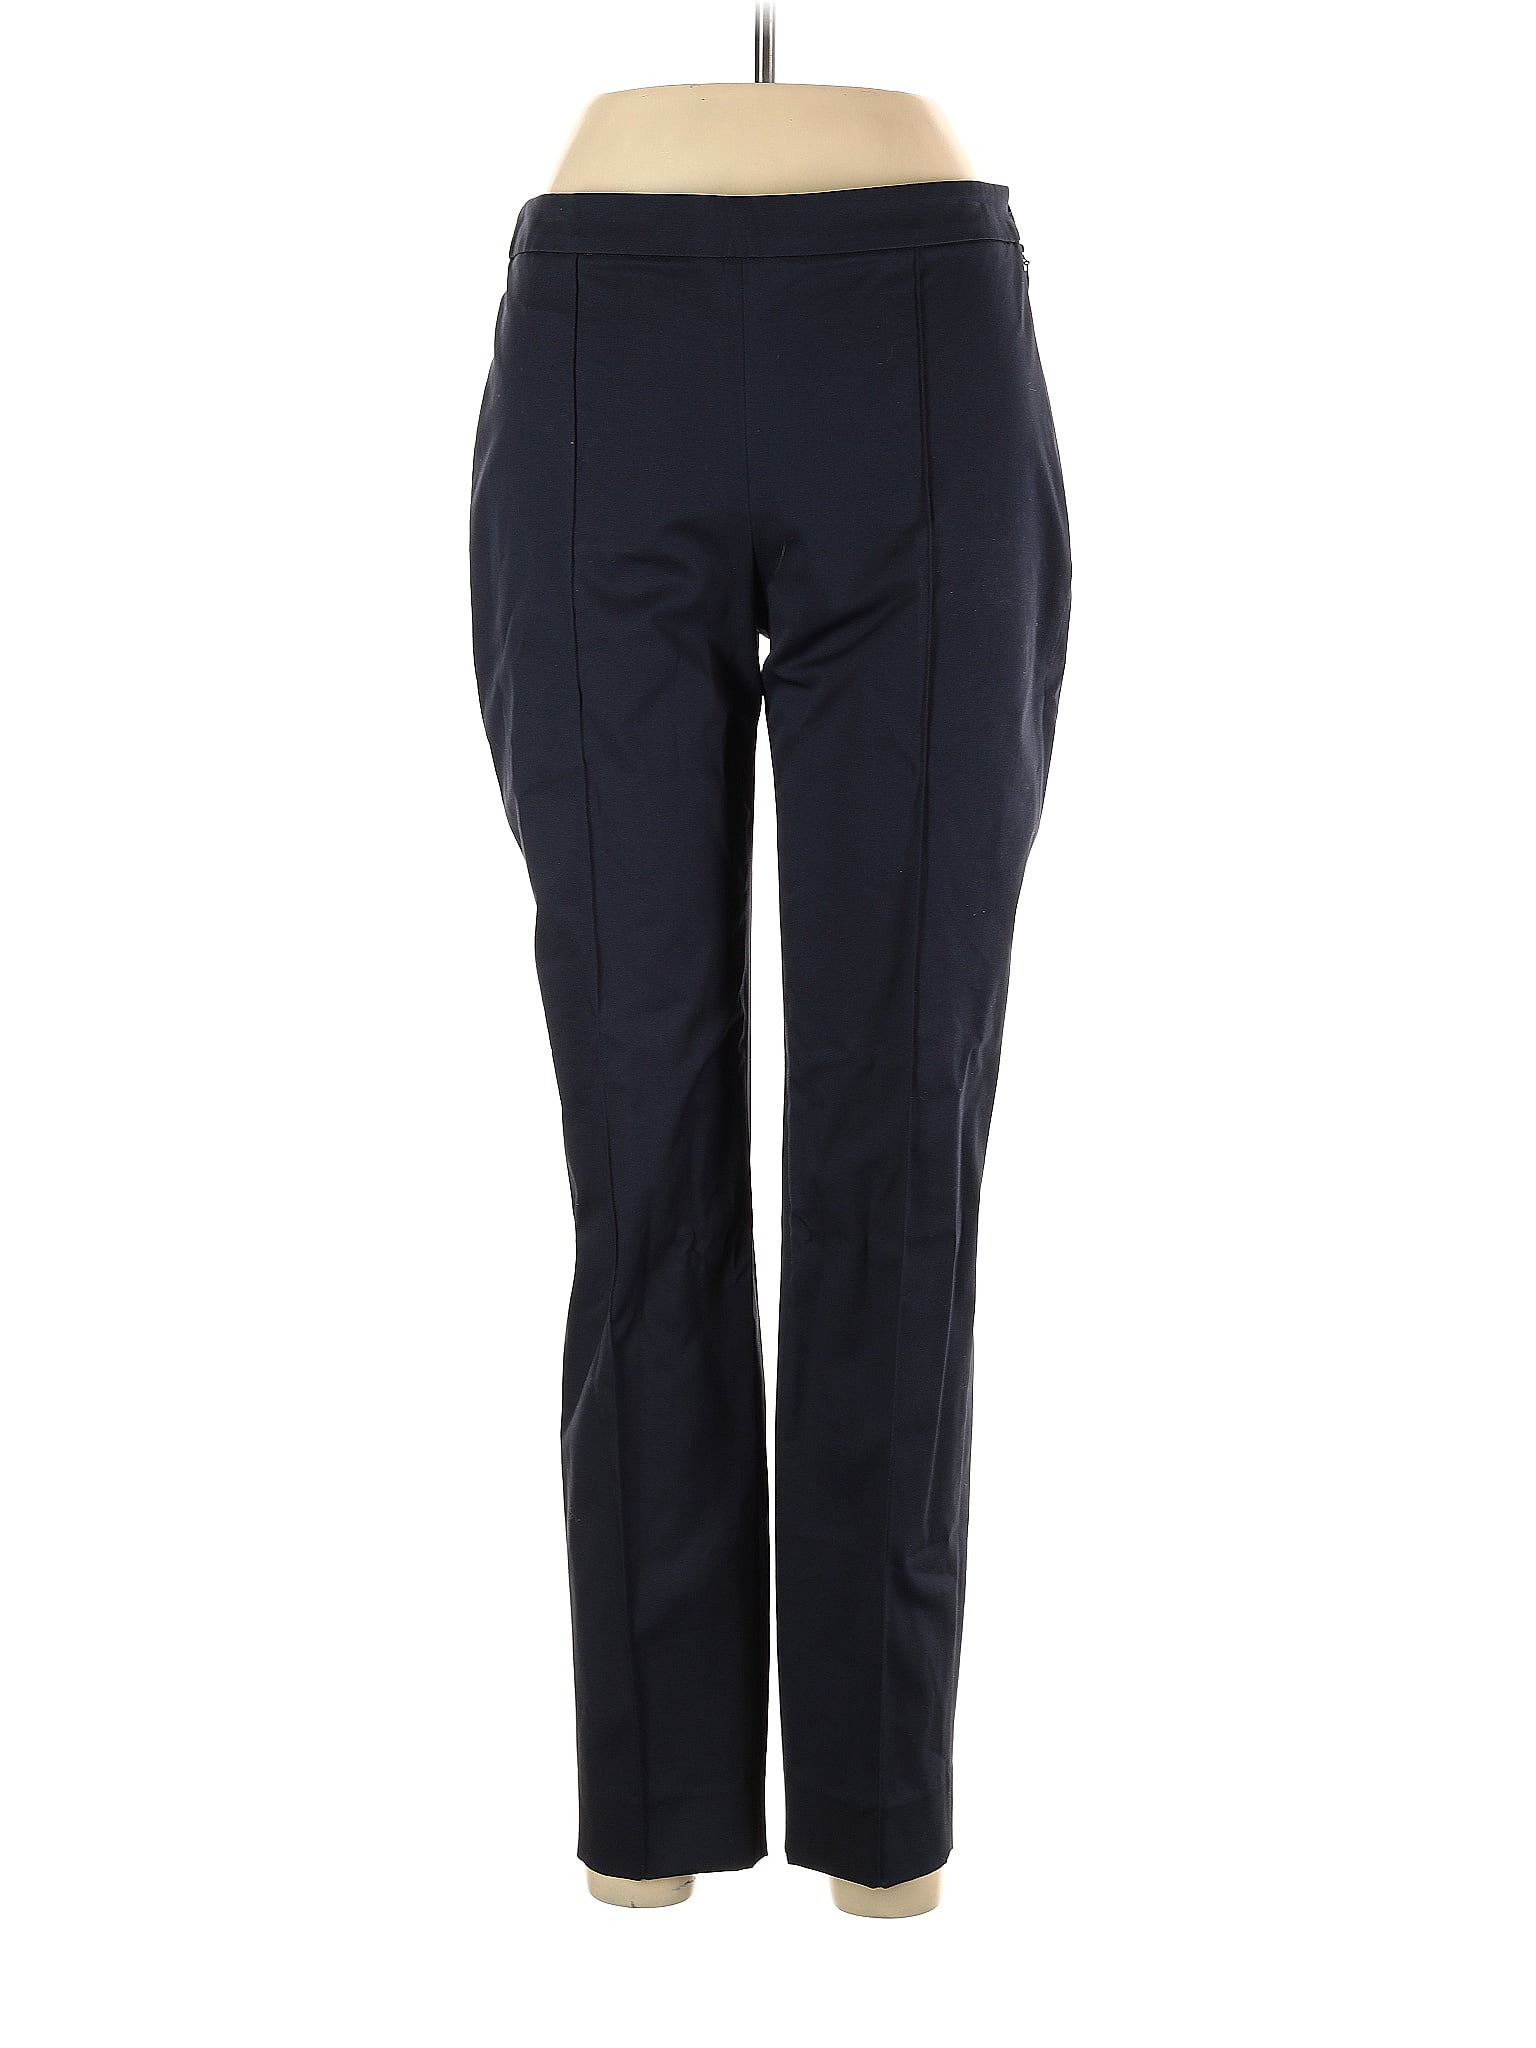 Loro Piana Solid Black Blue Dress Pants Size 42 (IT) - 88% off | thredUP